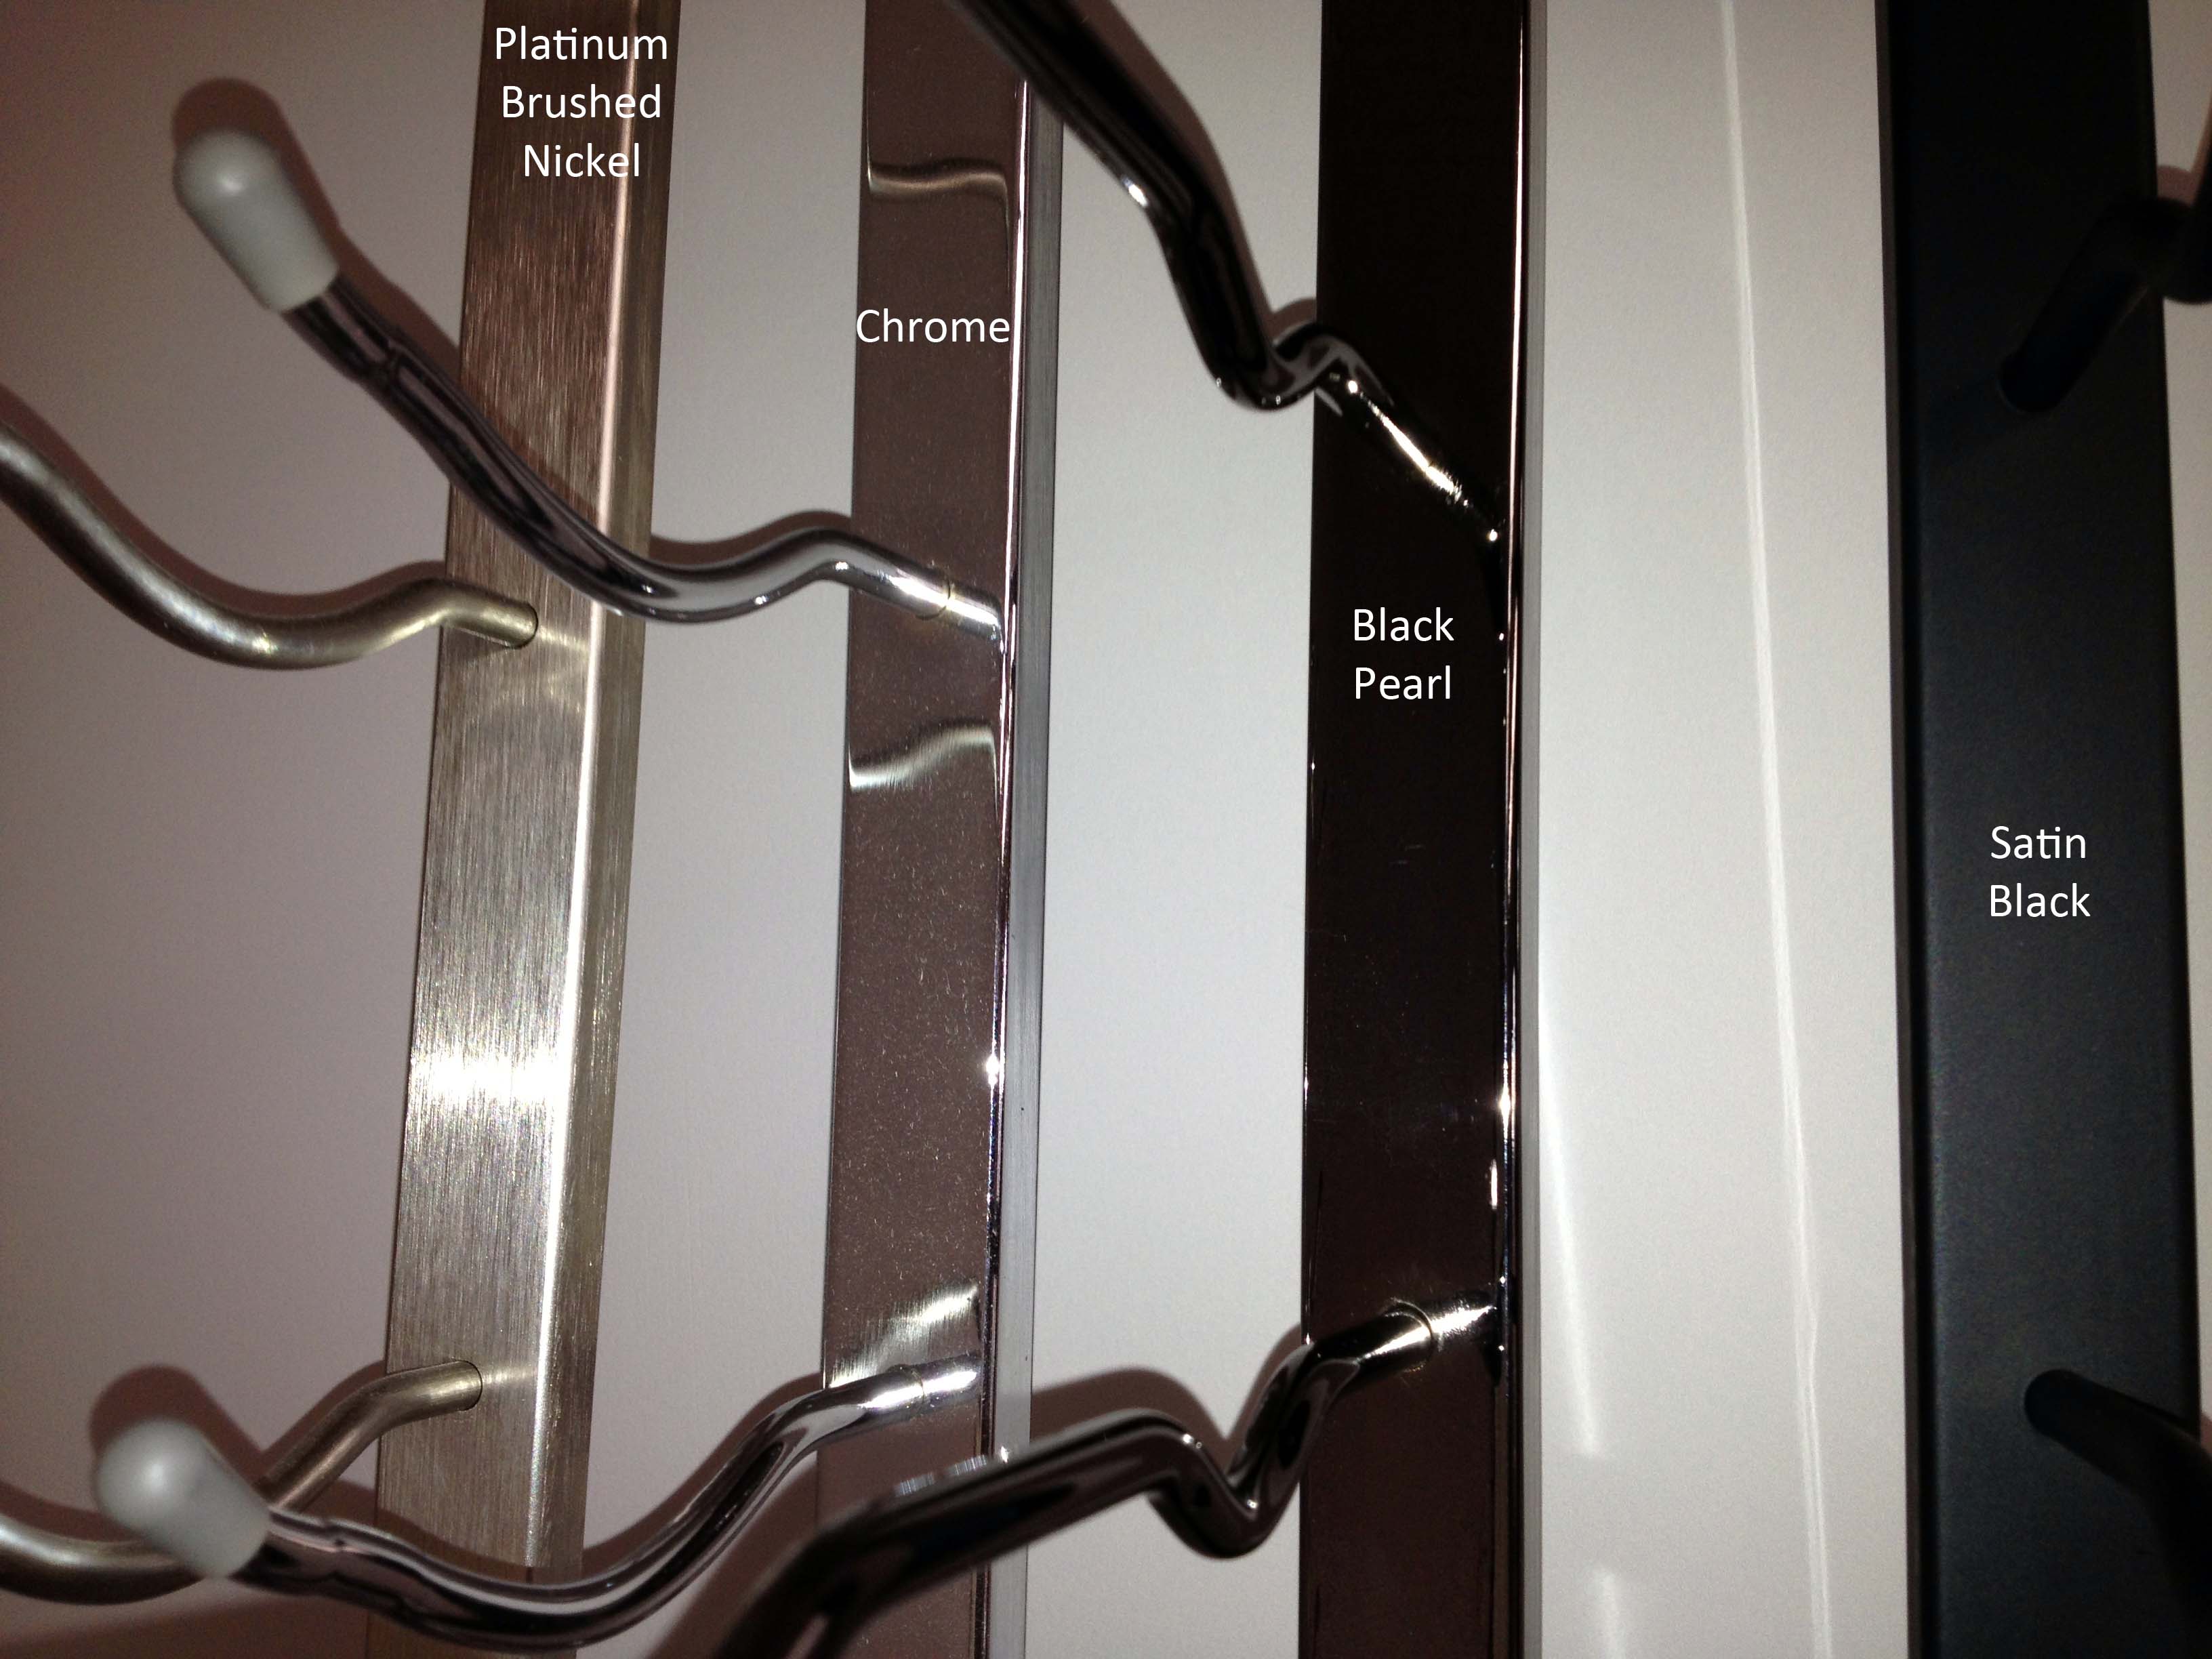 Polished Chrome Platinum Brushed Nickle Black Pearl Satin Black Finish Comparison Cellar Wine Racks